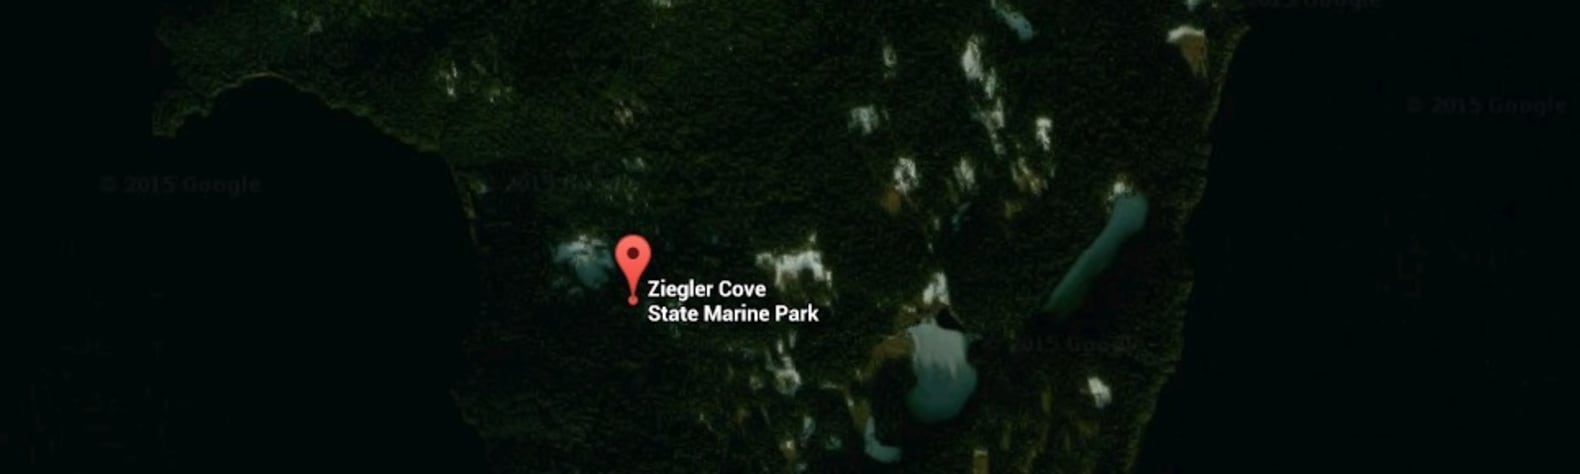 Ziegler Cove State Marine Park